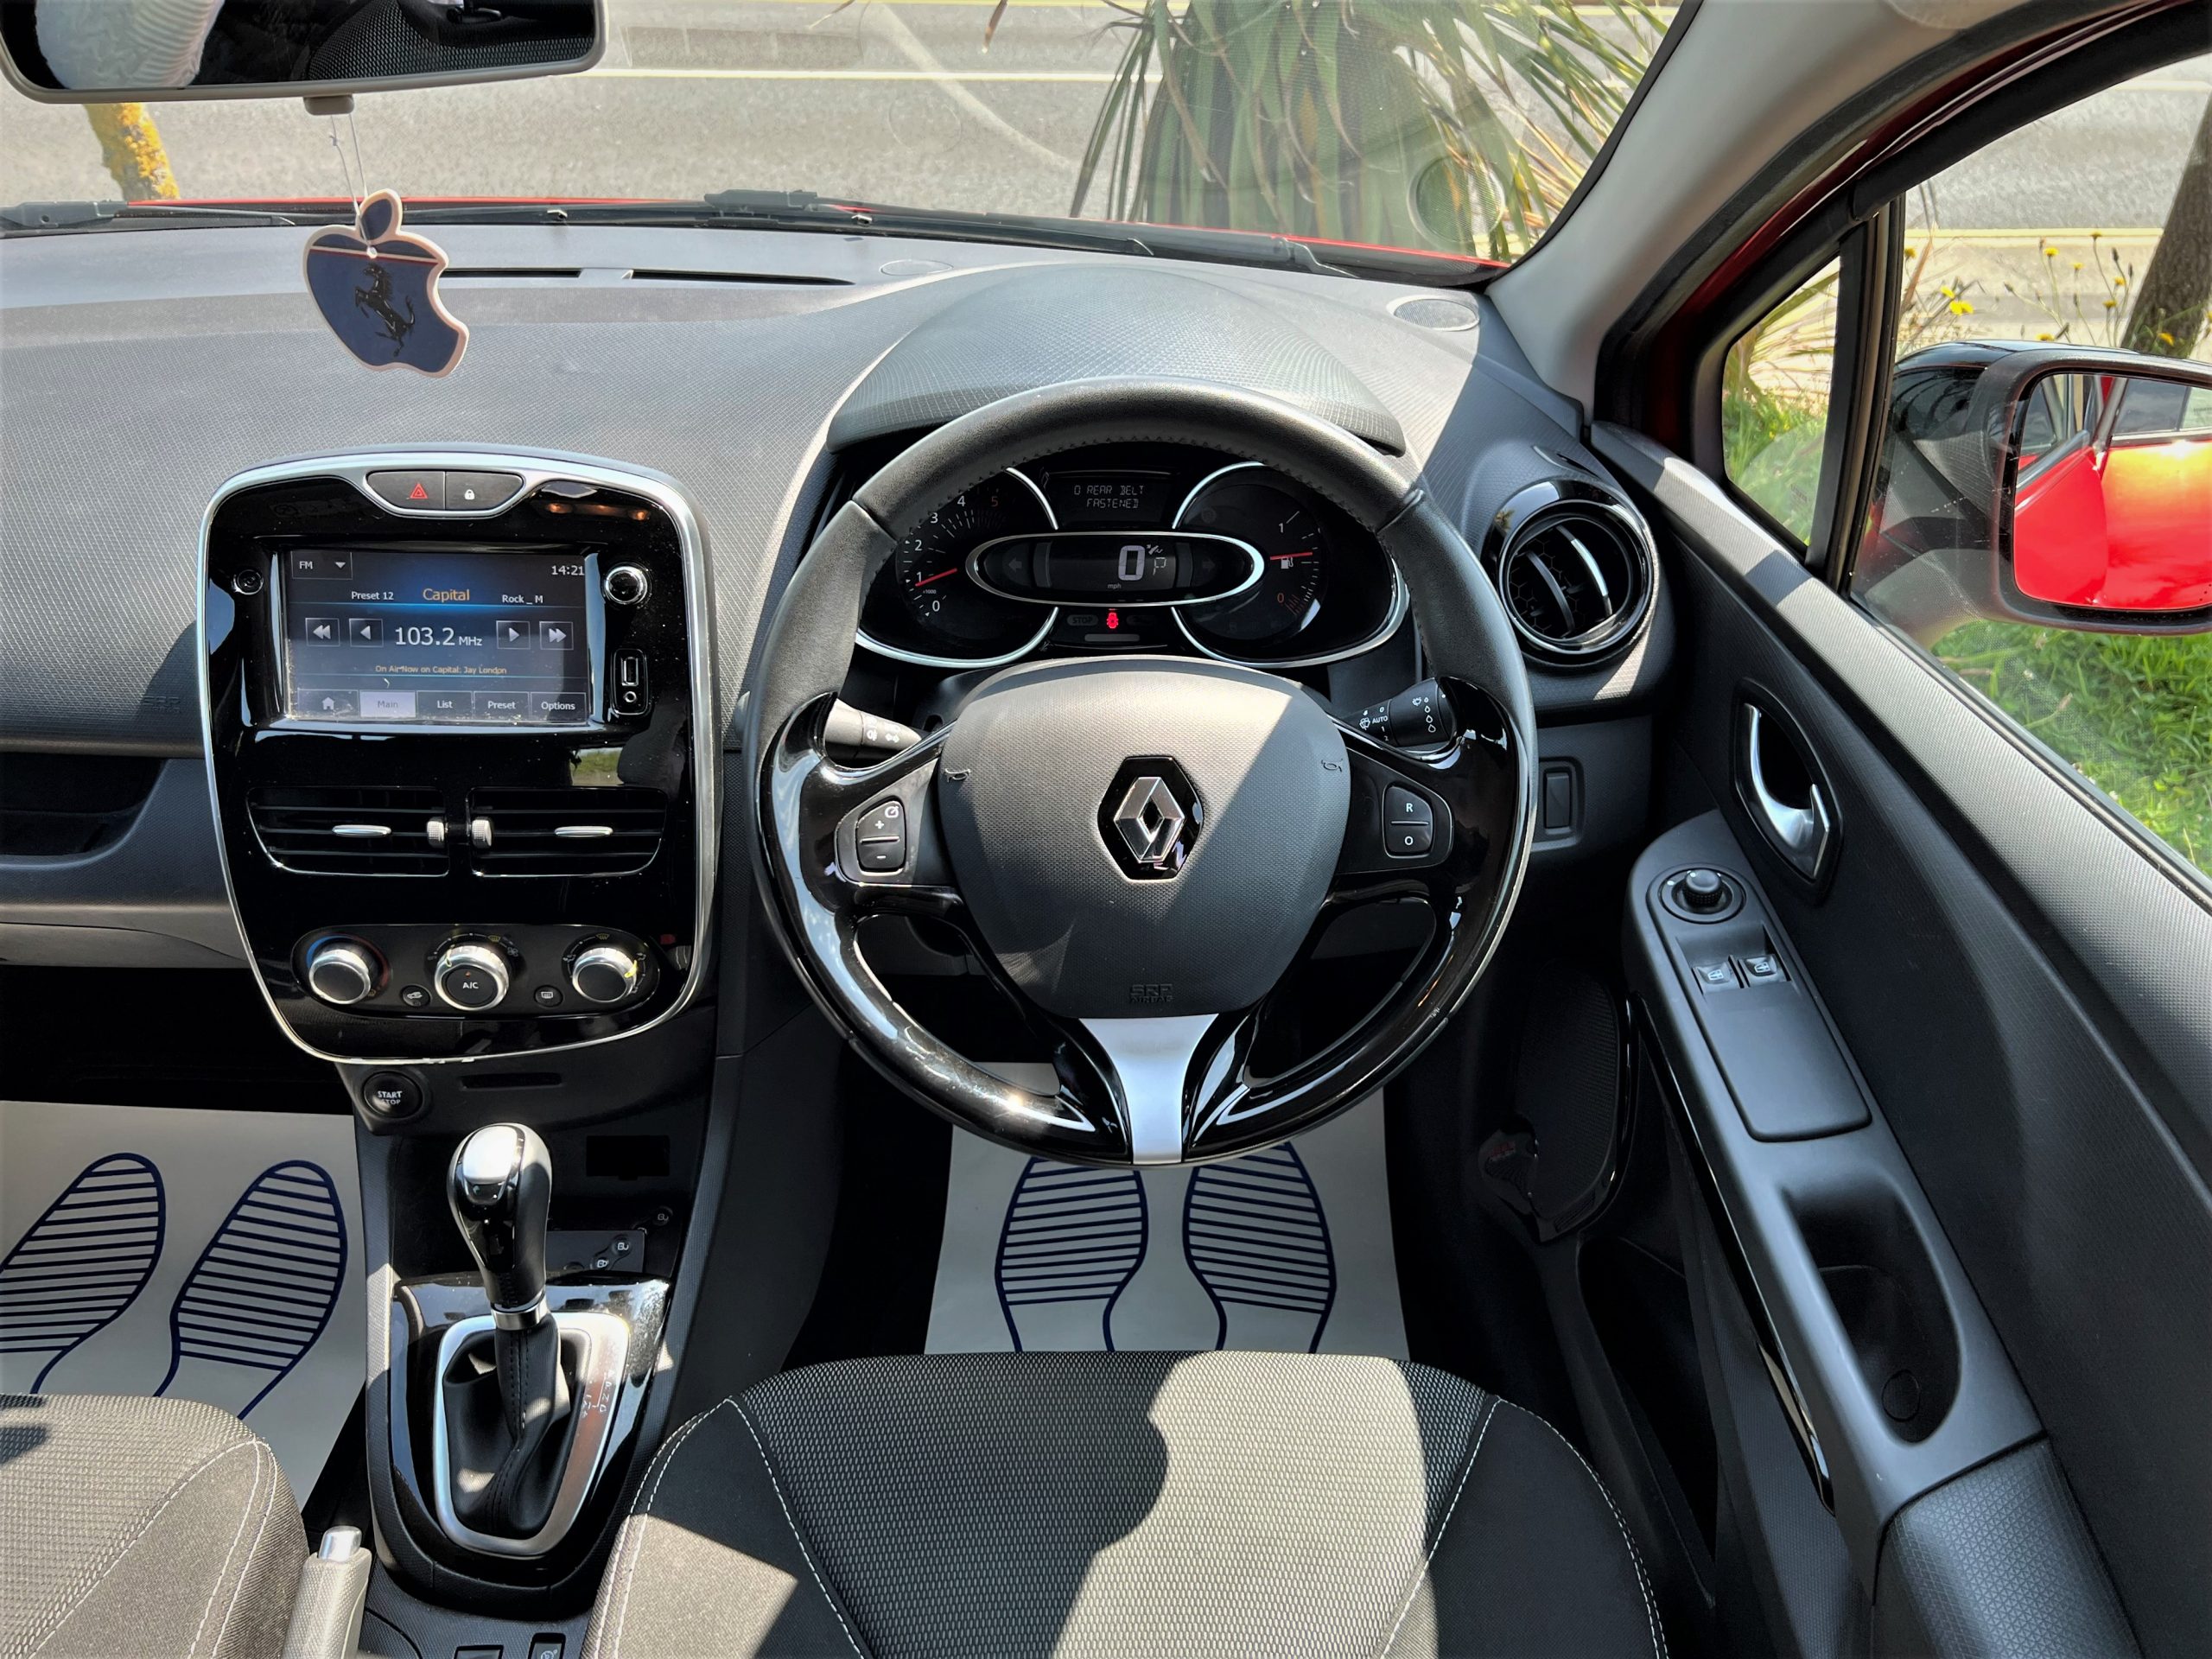 2015 Renault Clio 1.5 dCi 90 Dynamique MediaNav EDC Automatic